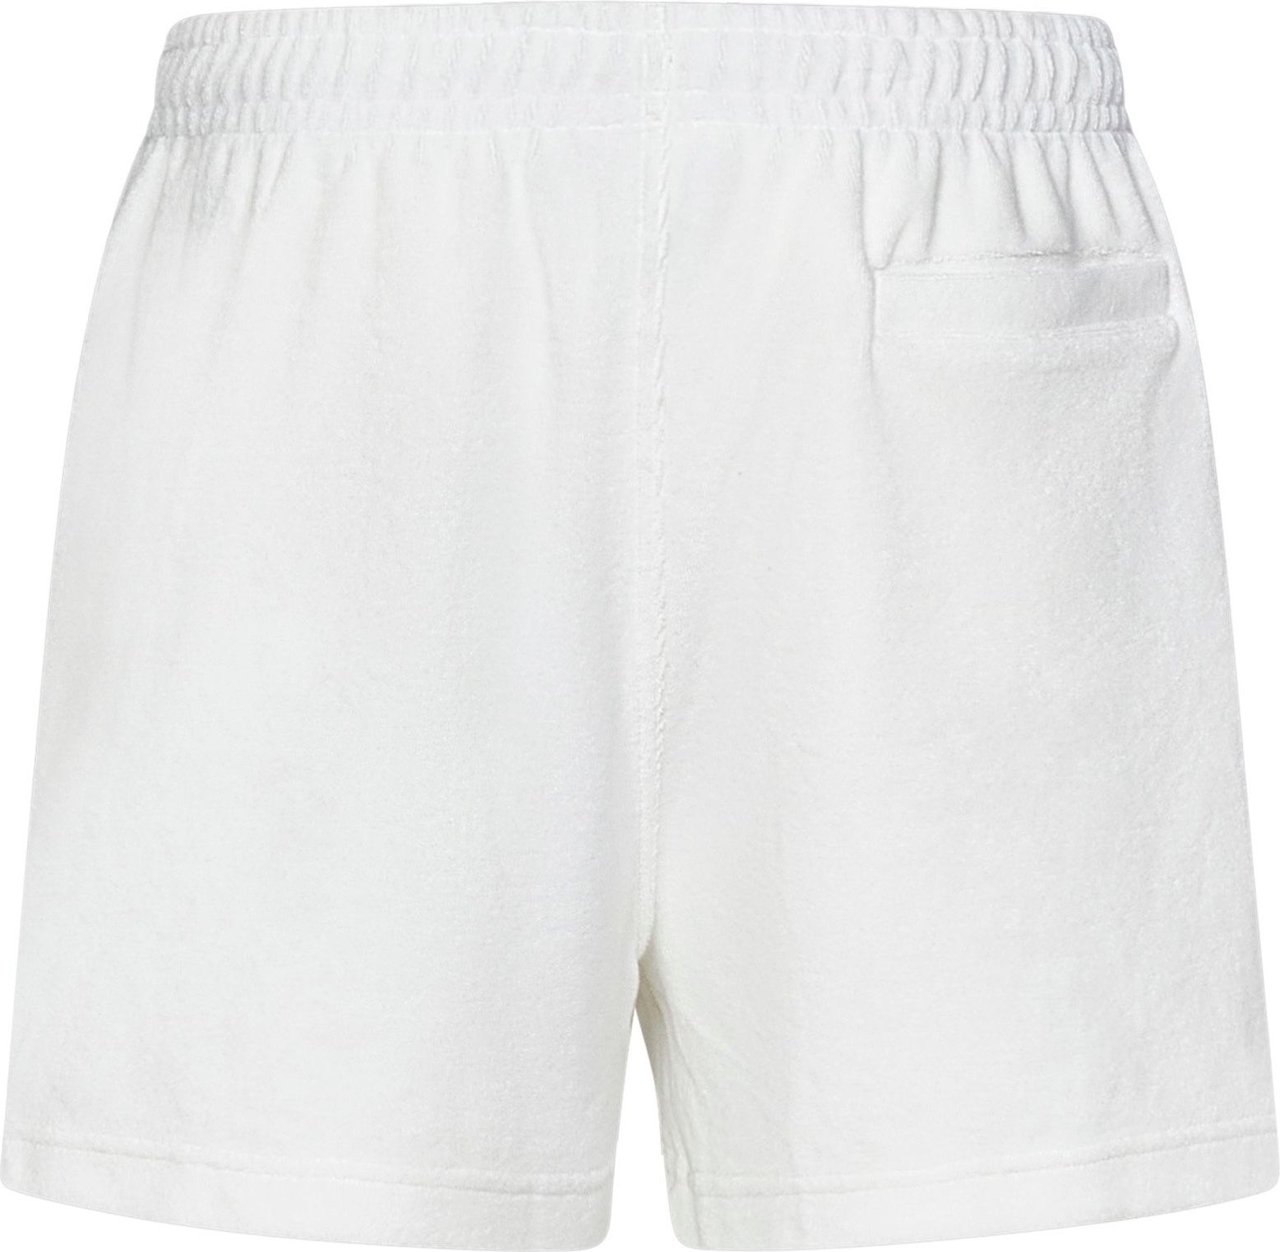 Lacoste Lacoste Shorts White Wit